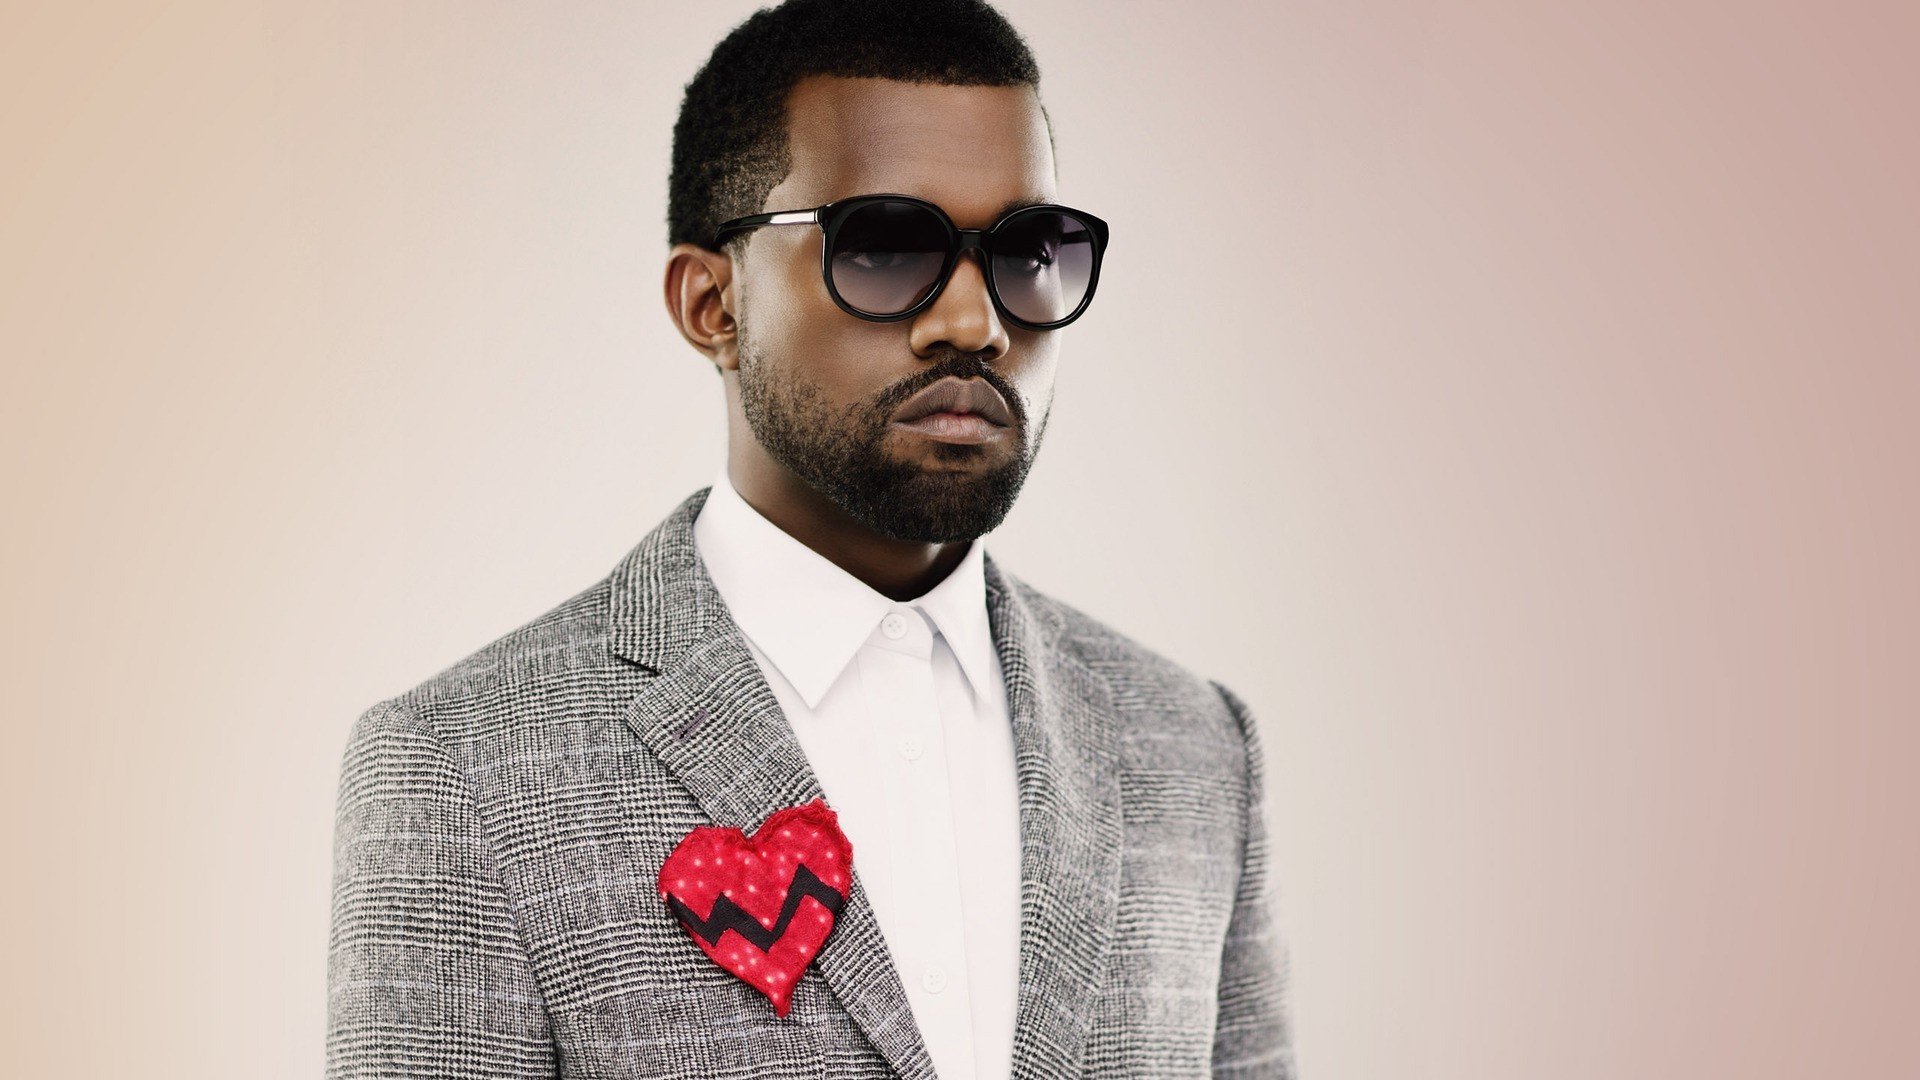 Download Hd 1080p Kanye West Computer Wallpaper Id - Kanye 808s And Heartbreak Suit - HD Wallpaper 